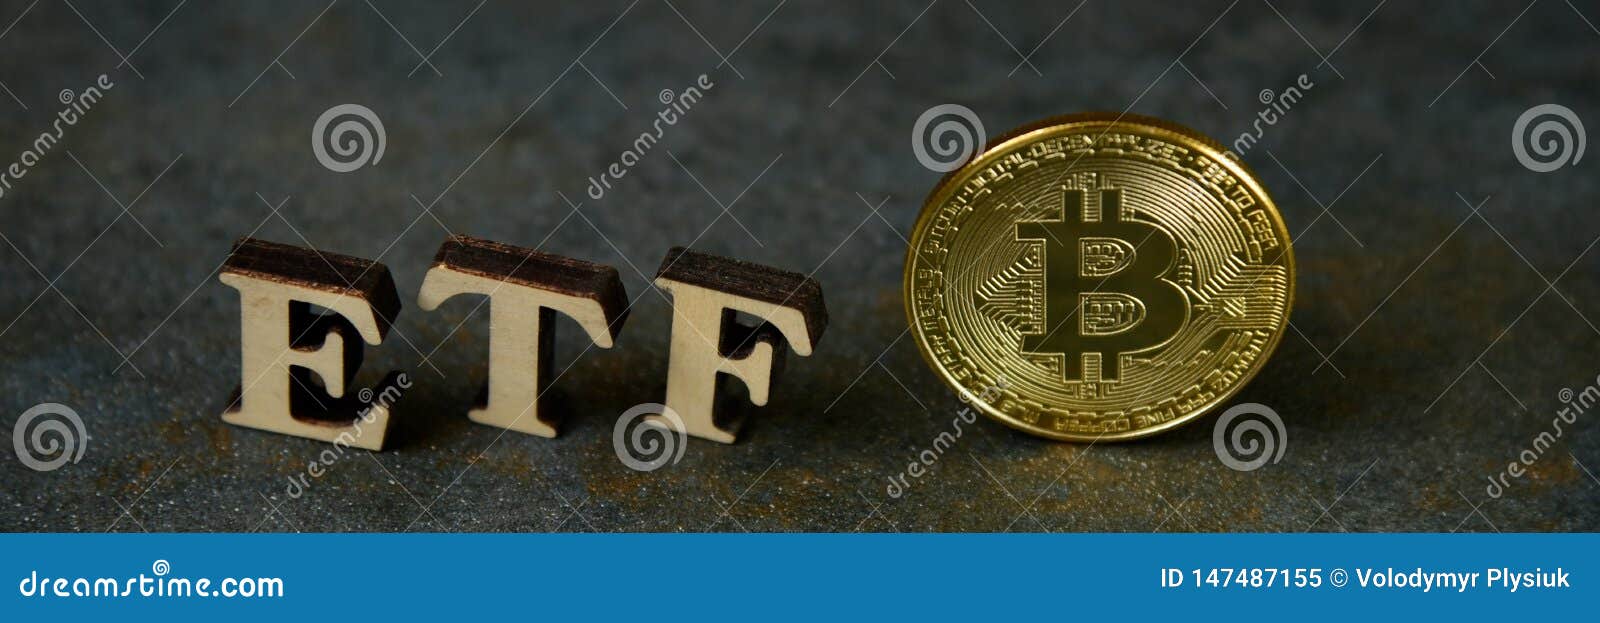 Etf for bitcoin cash crypto billionaire buys bugatti